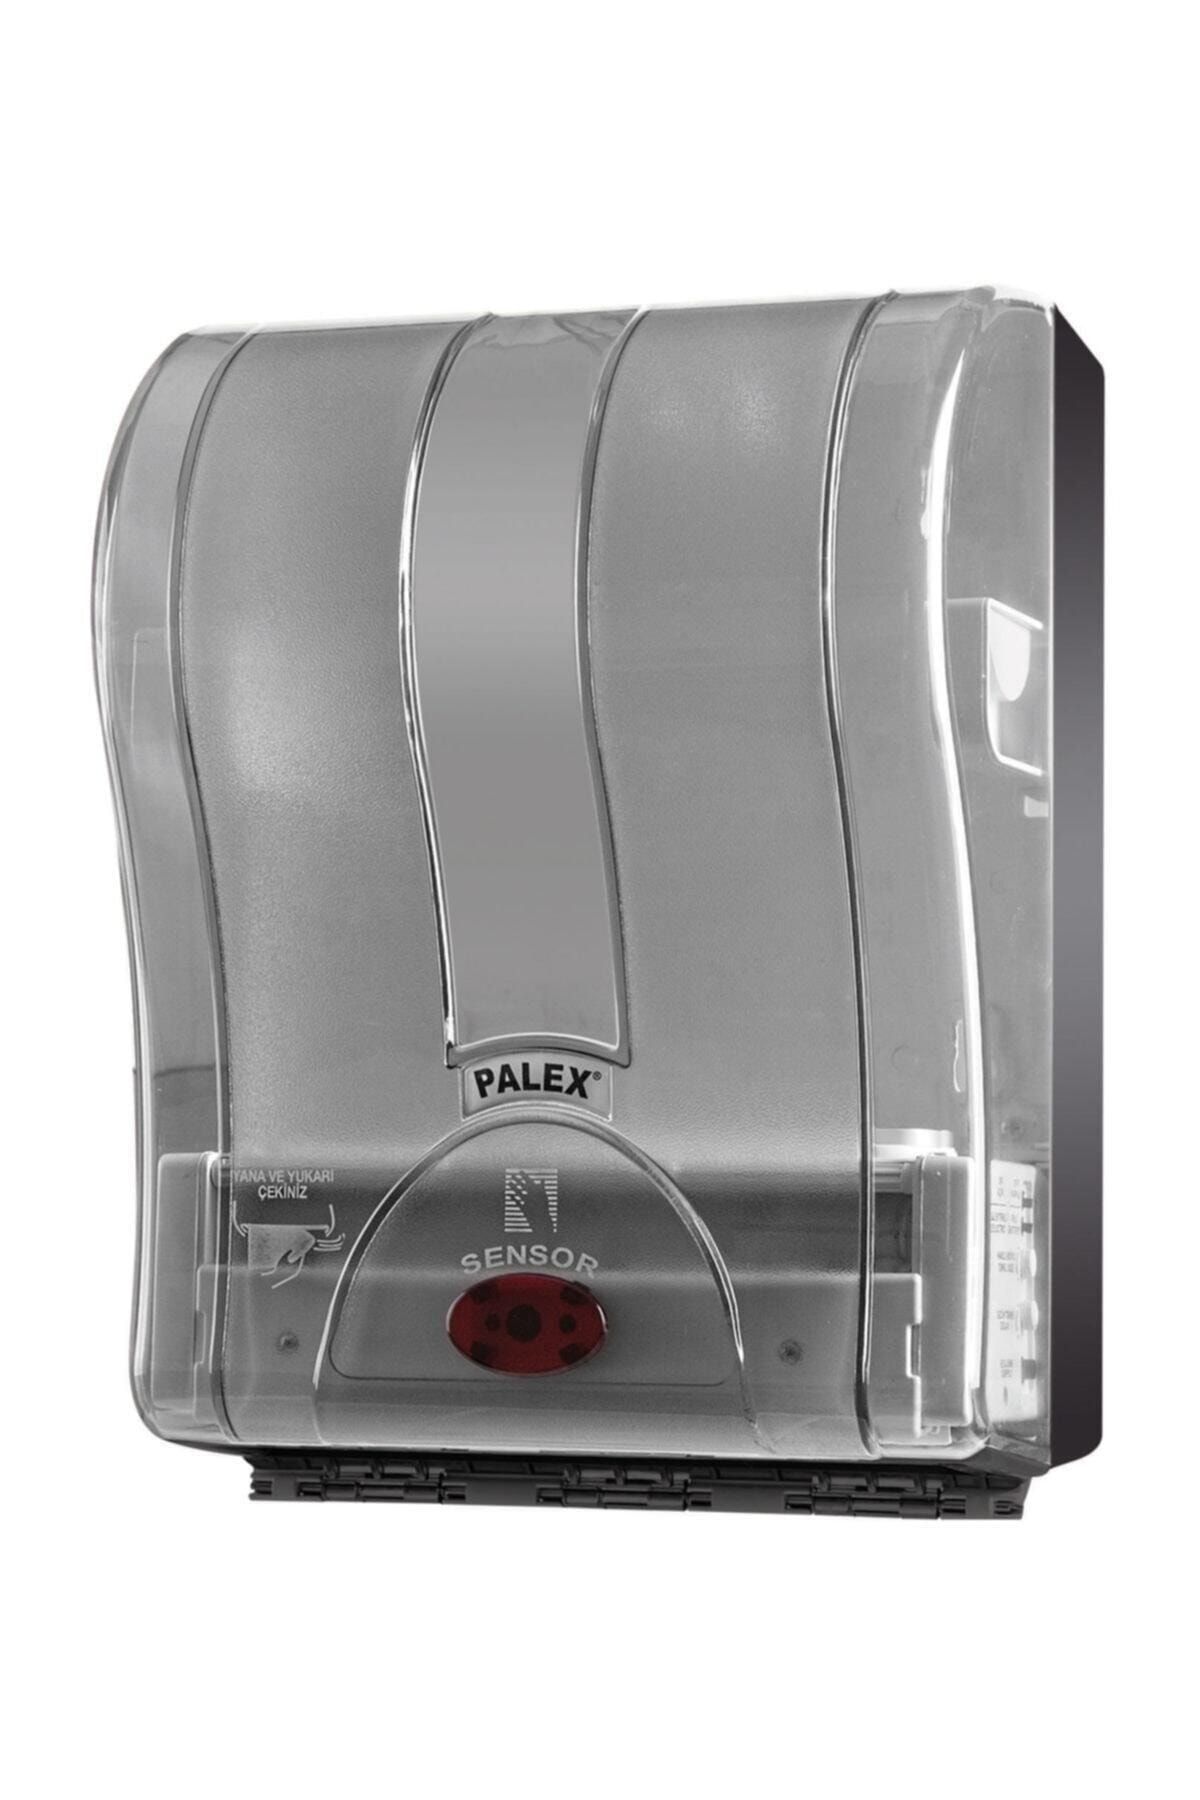 Palex 3491-2 Sensörlü Otomatik Havlu Makinası Şeffaf Füme